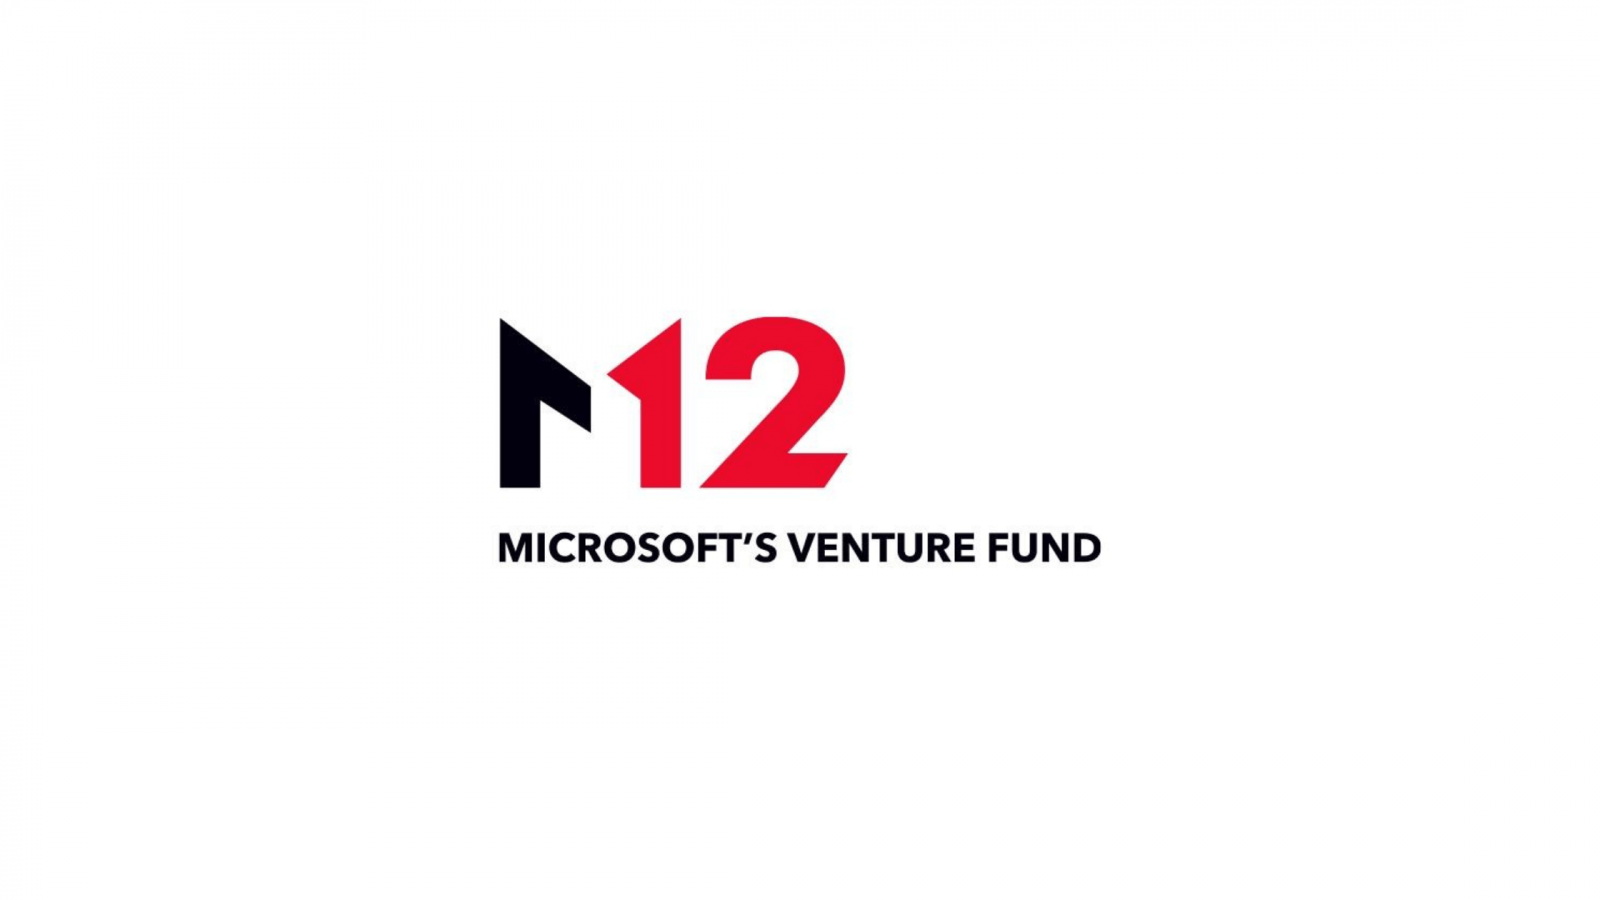 Microsoft's Venture Fund